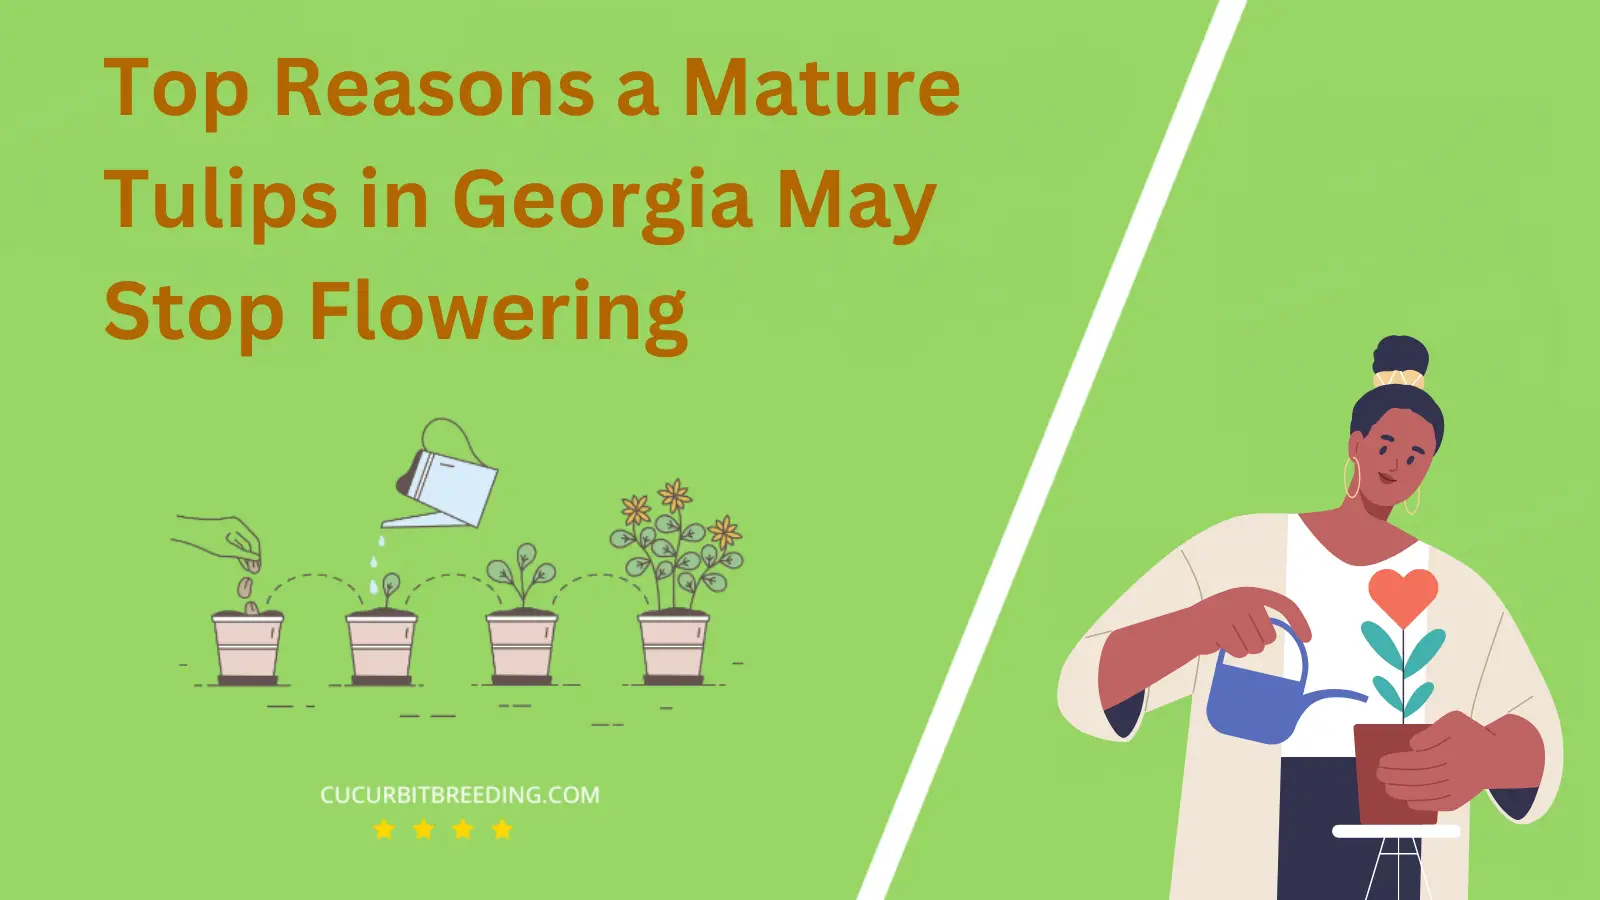 Top Reasons a Mature Tulips in Georgia May Stop Flowering